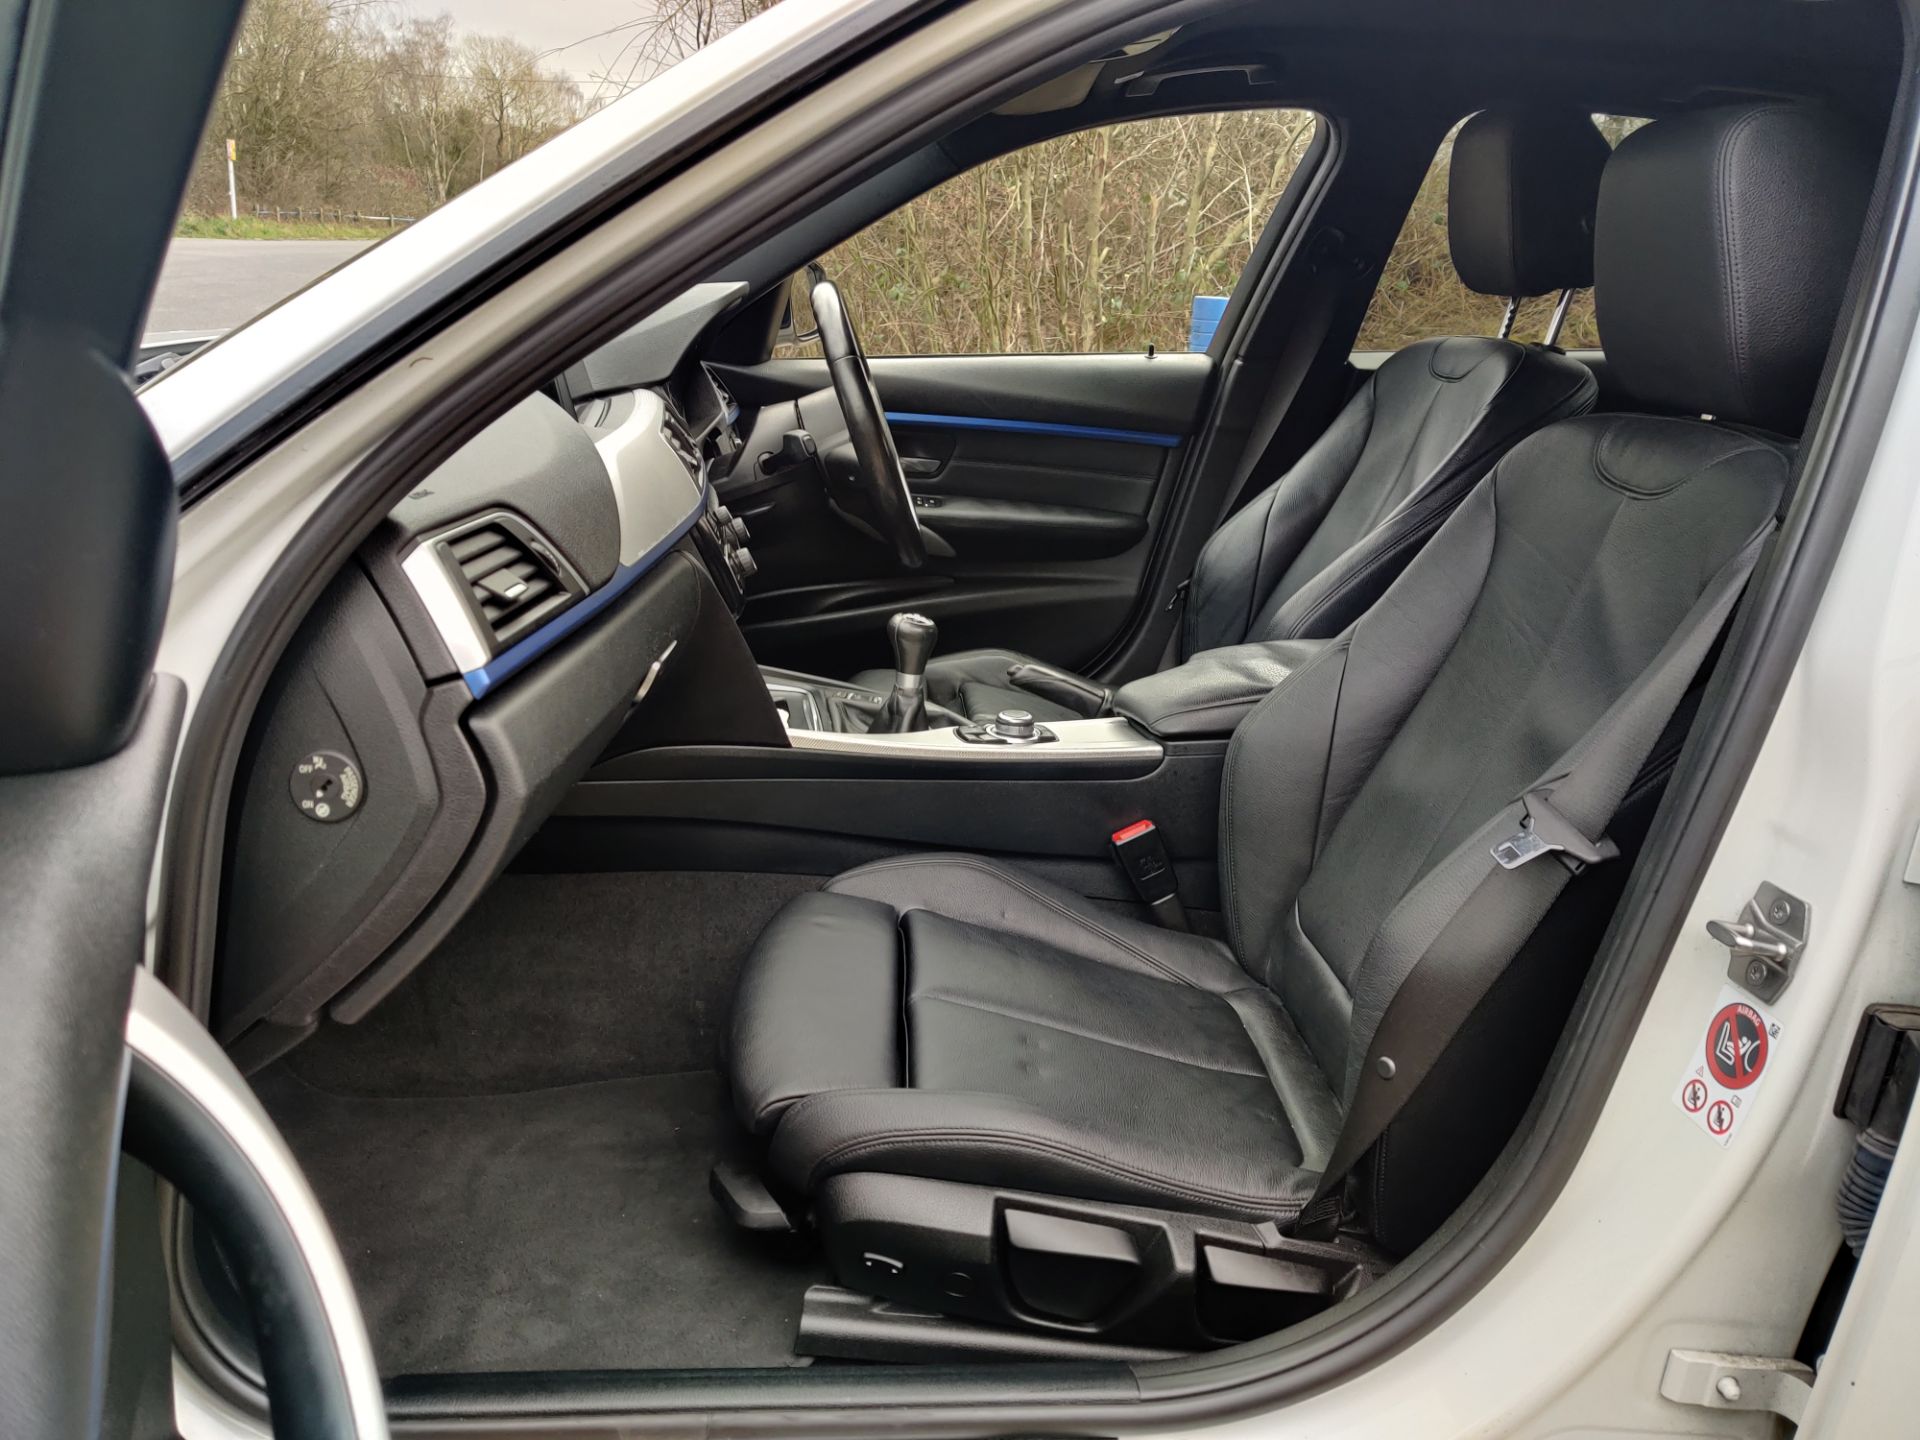 2015/65 REG BMW 318D M SPORT 2.0 DIESEL WHITE 4 DOOR SALOON, SHOWING 0 FORMER KEEPERS *NO VAT* - Image 8 of 23